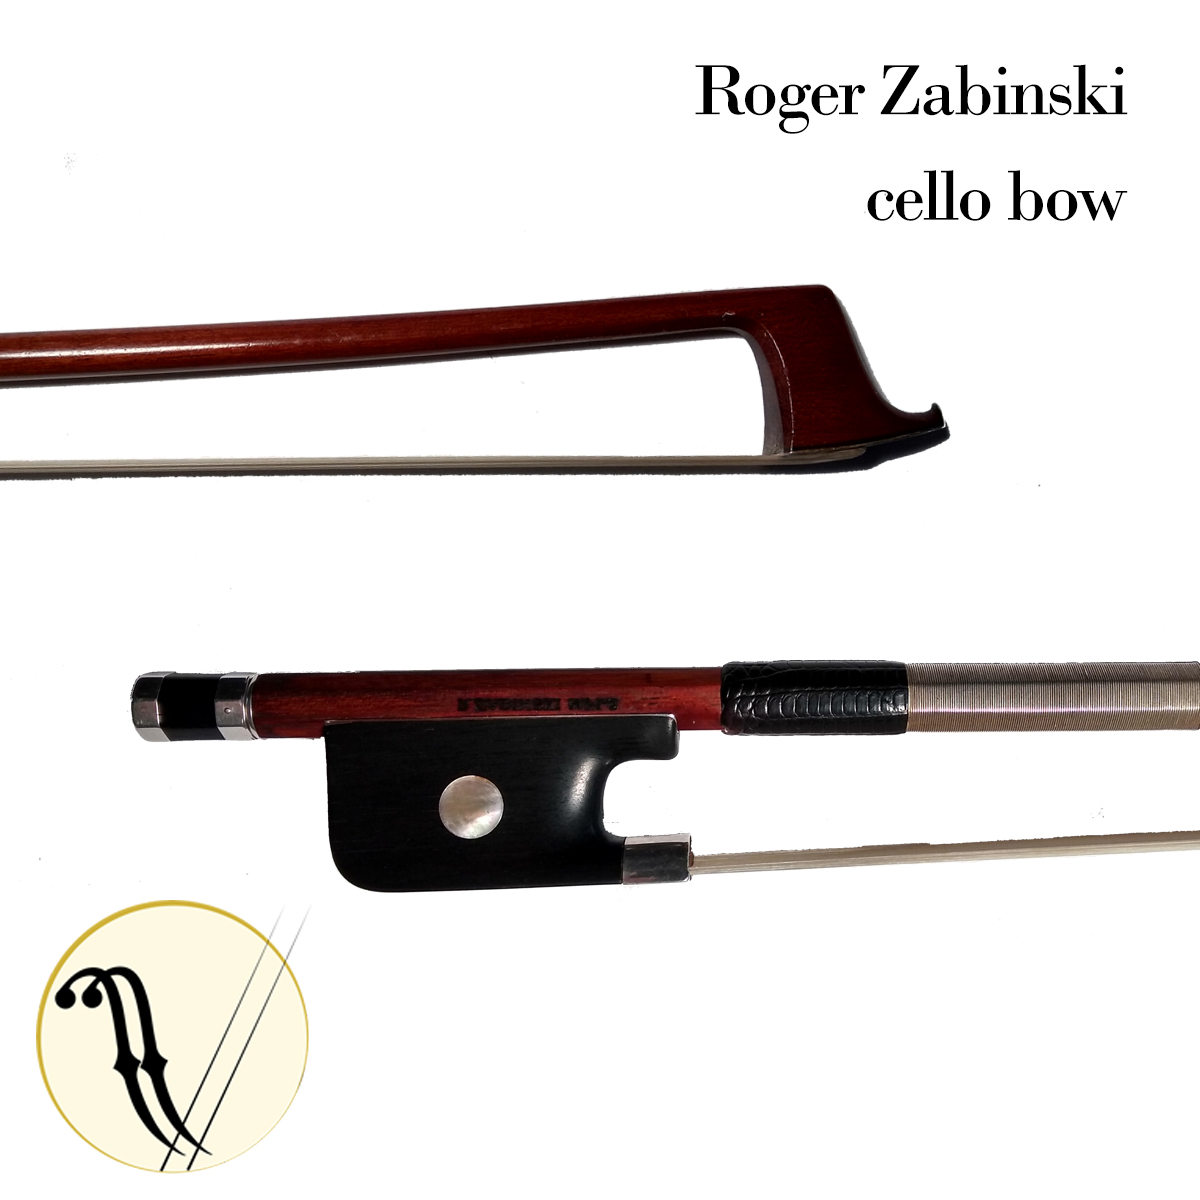 zabinski cello bow.jpg